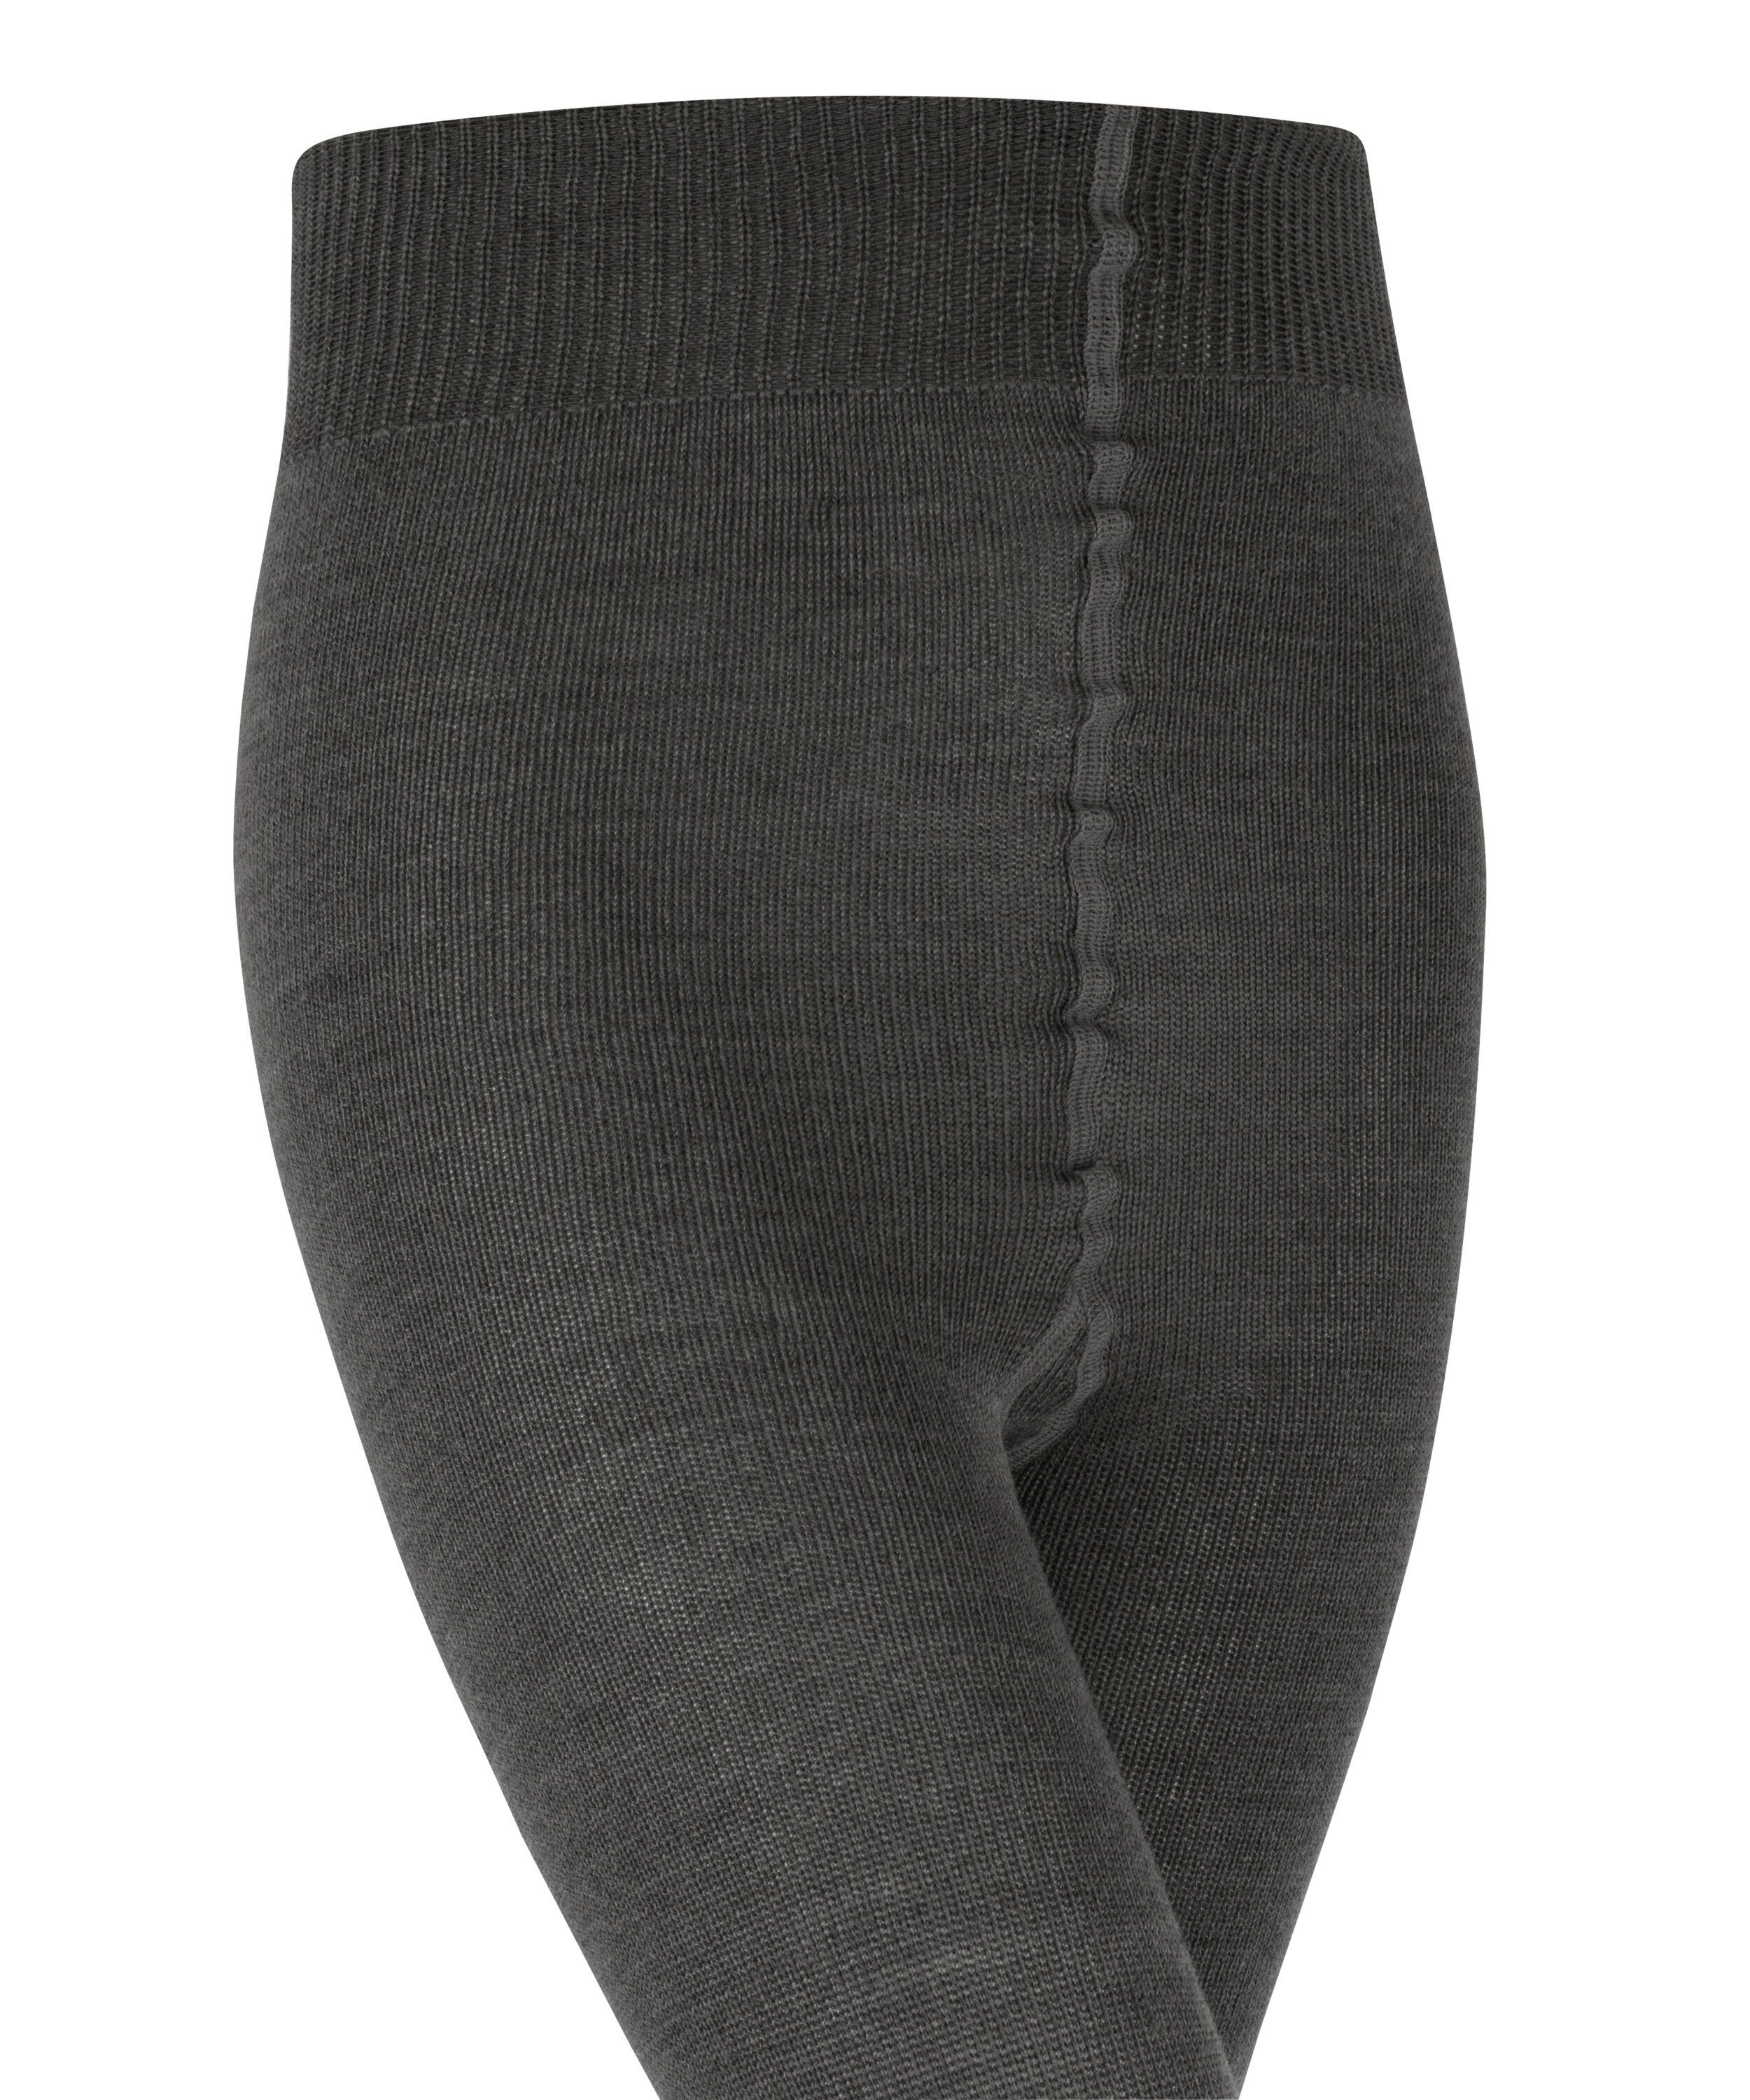 anthra.mel FALKE (3080) (1 Strickstrumpfhose mit verstärkten Wool Comfort Belastungszonen St)